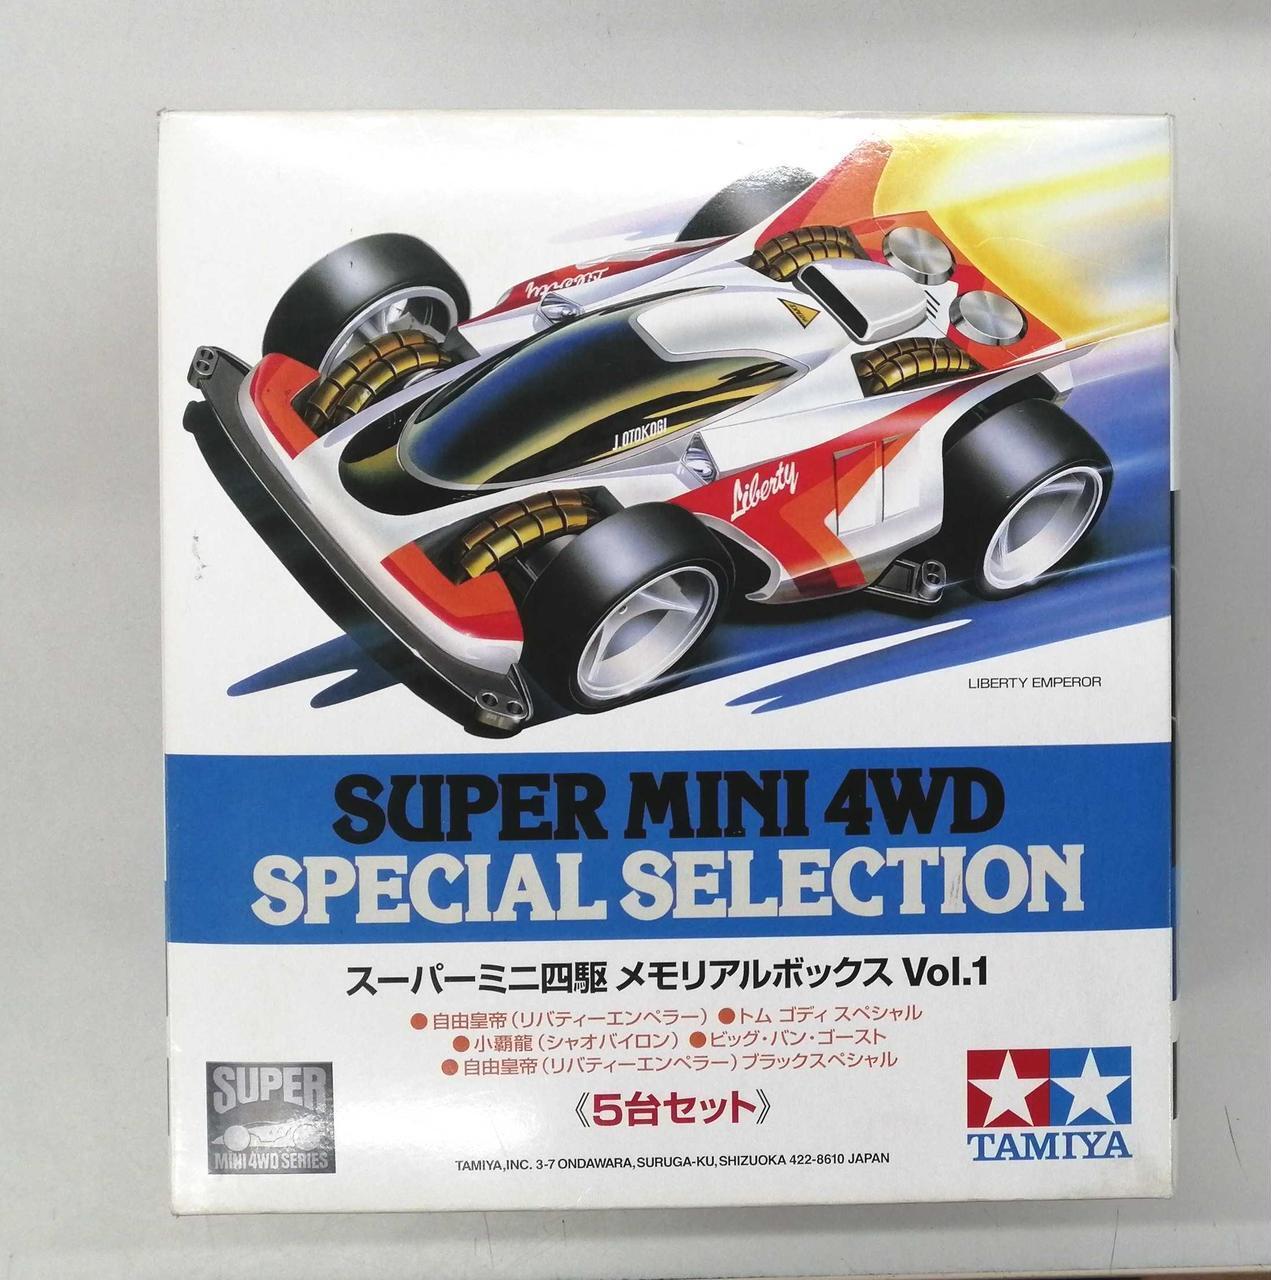 Tamiya Super Mini 4Wd Memorial Box Vol.1